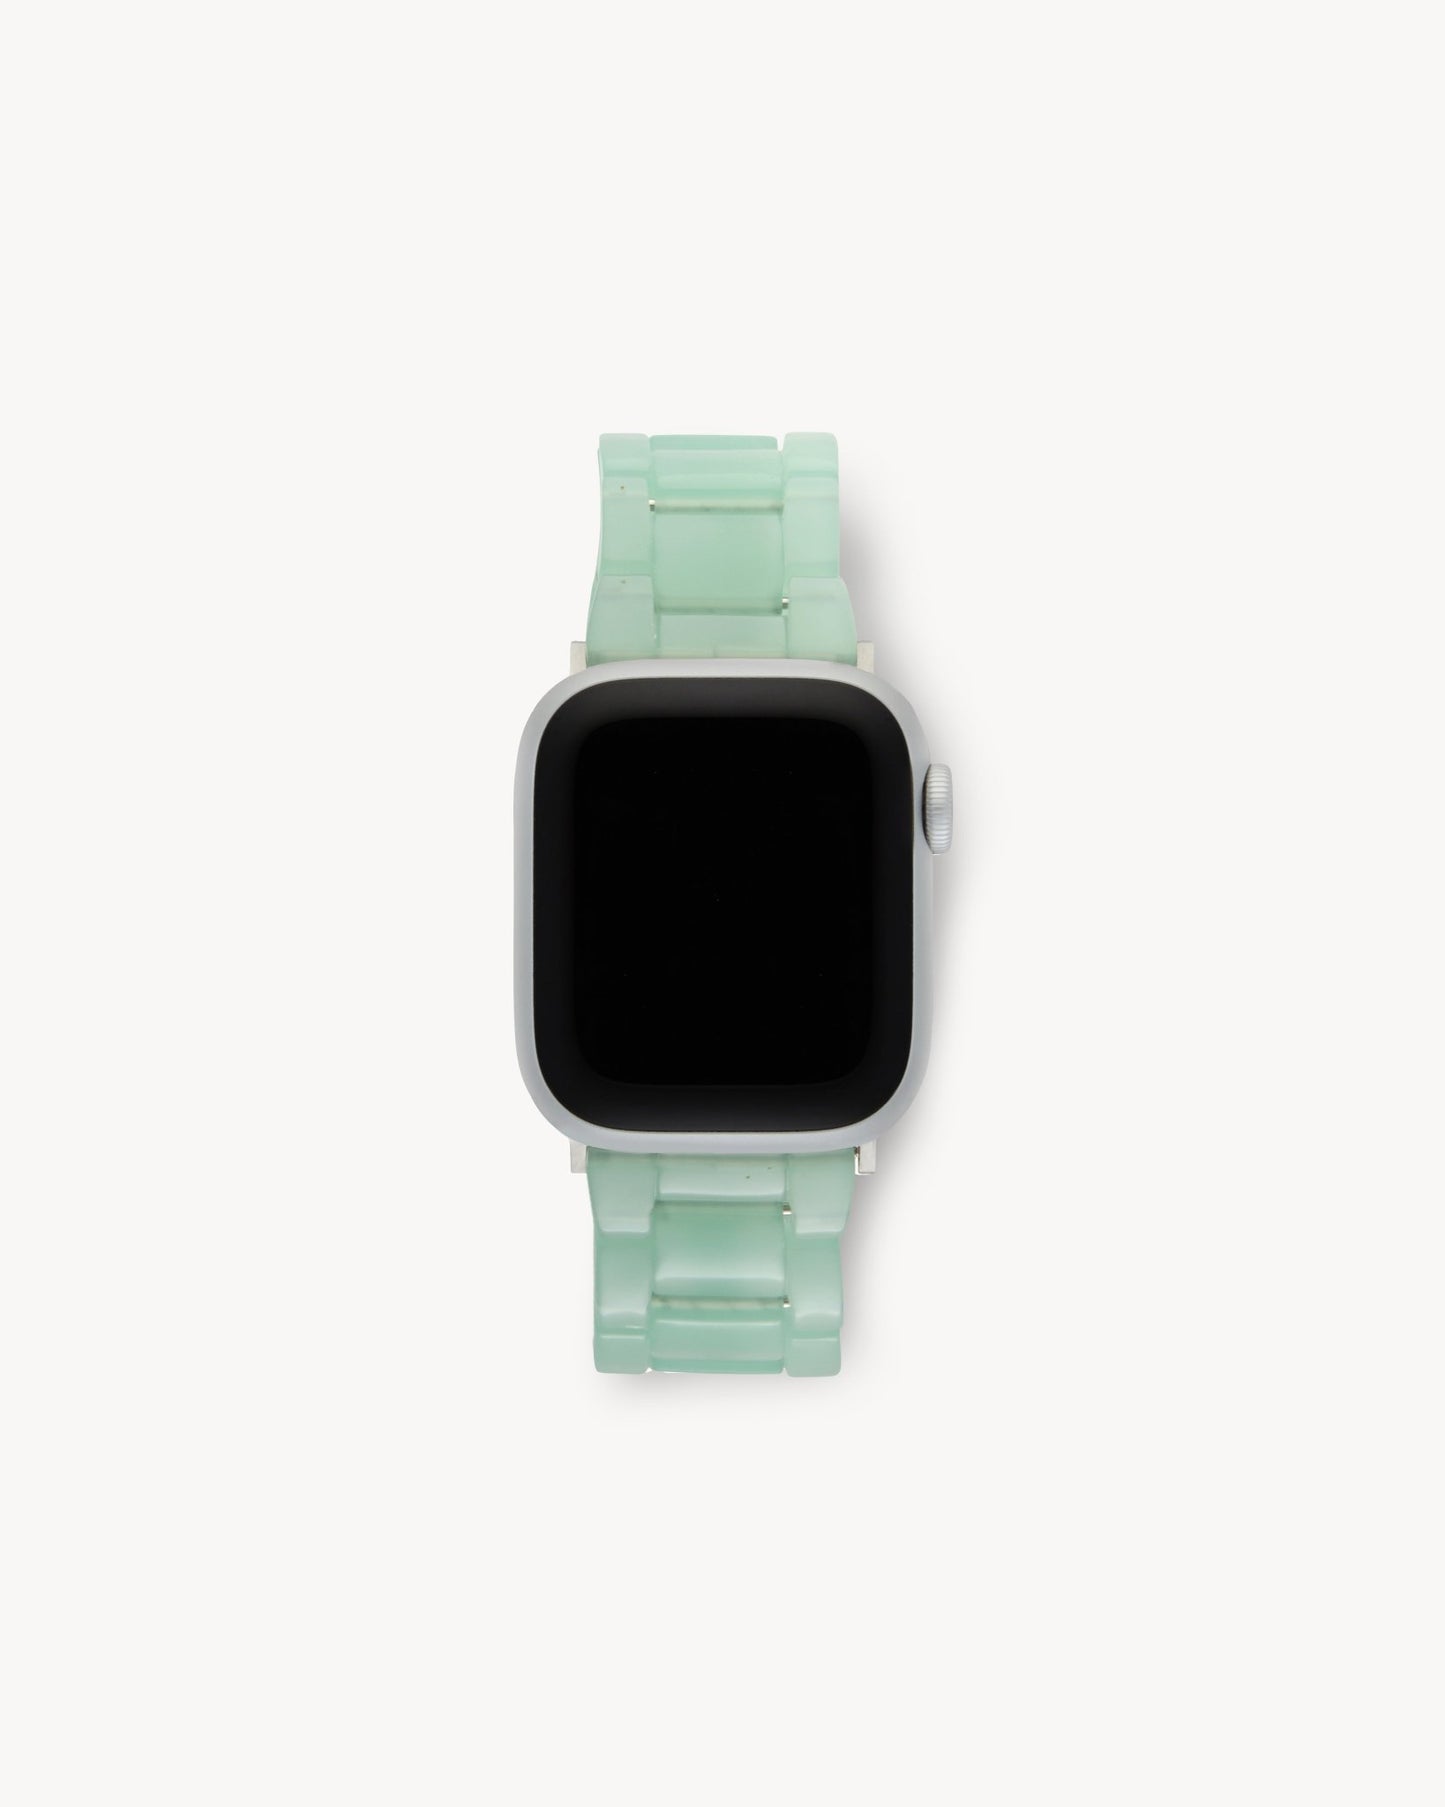 MACHETE Apple Watch Band in Sea Glass